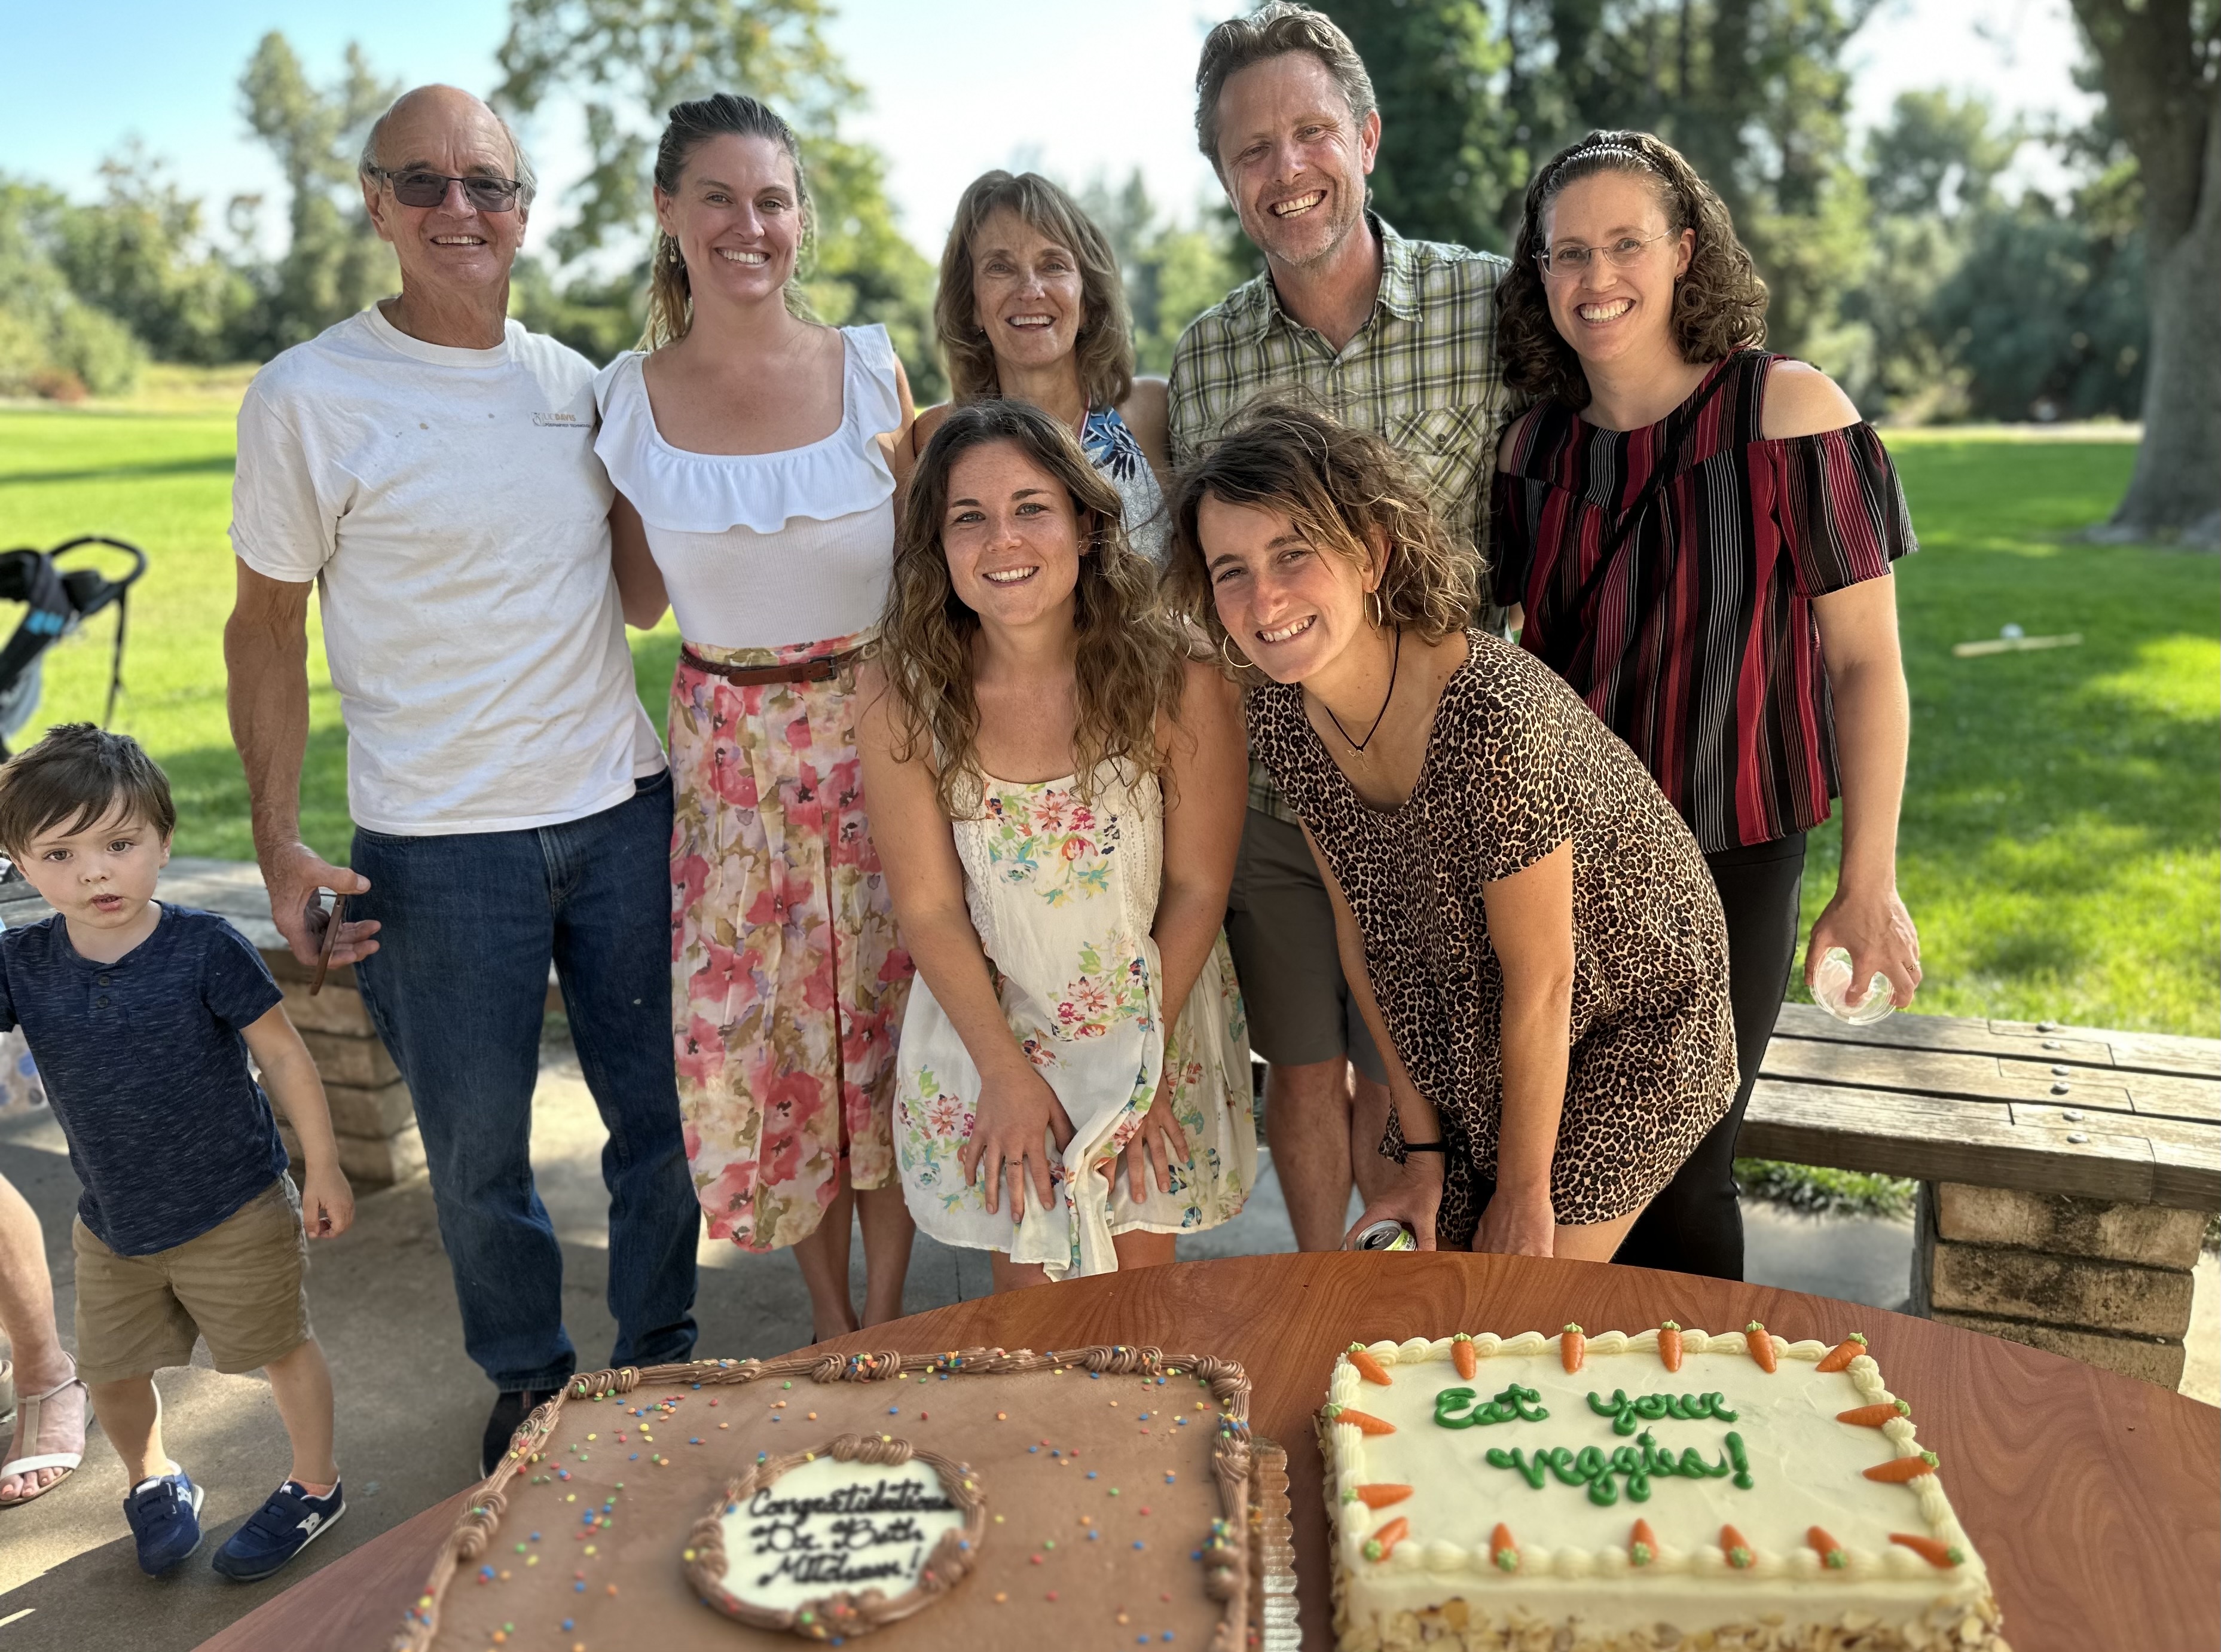 Group surrounding cake for retirement celebration.